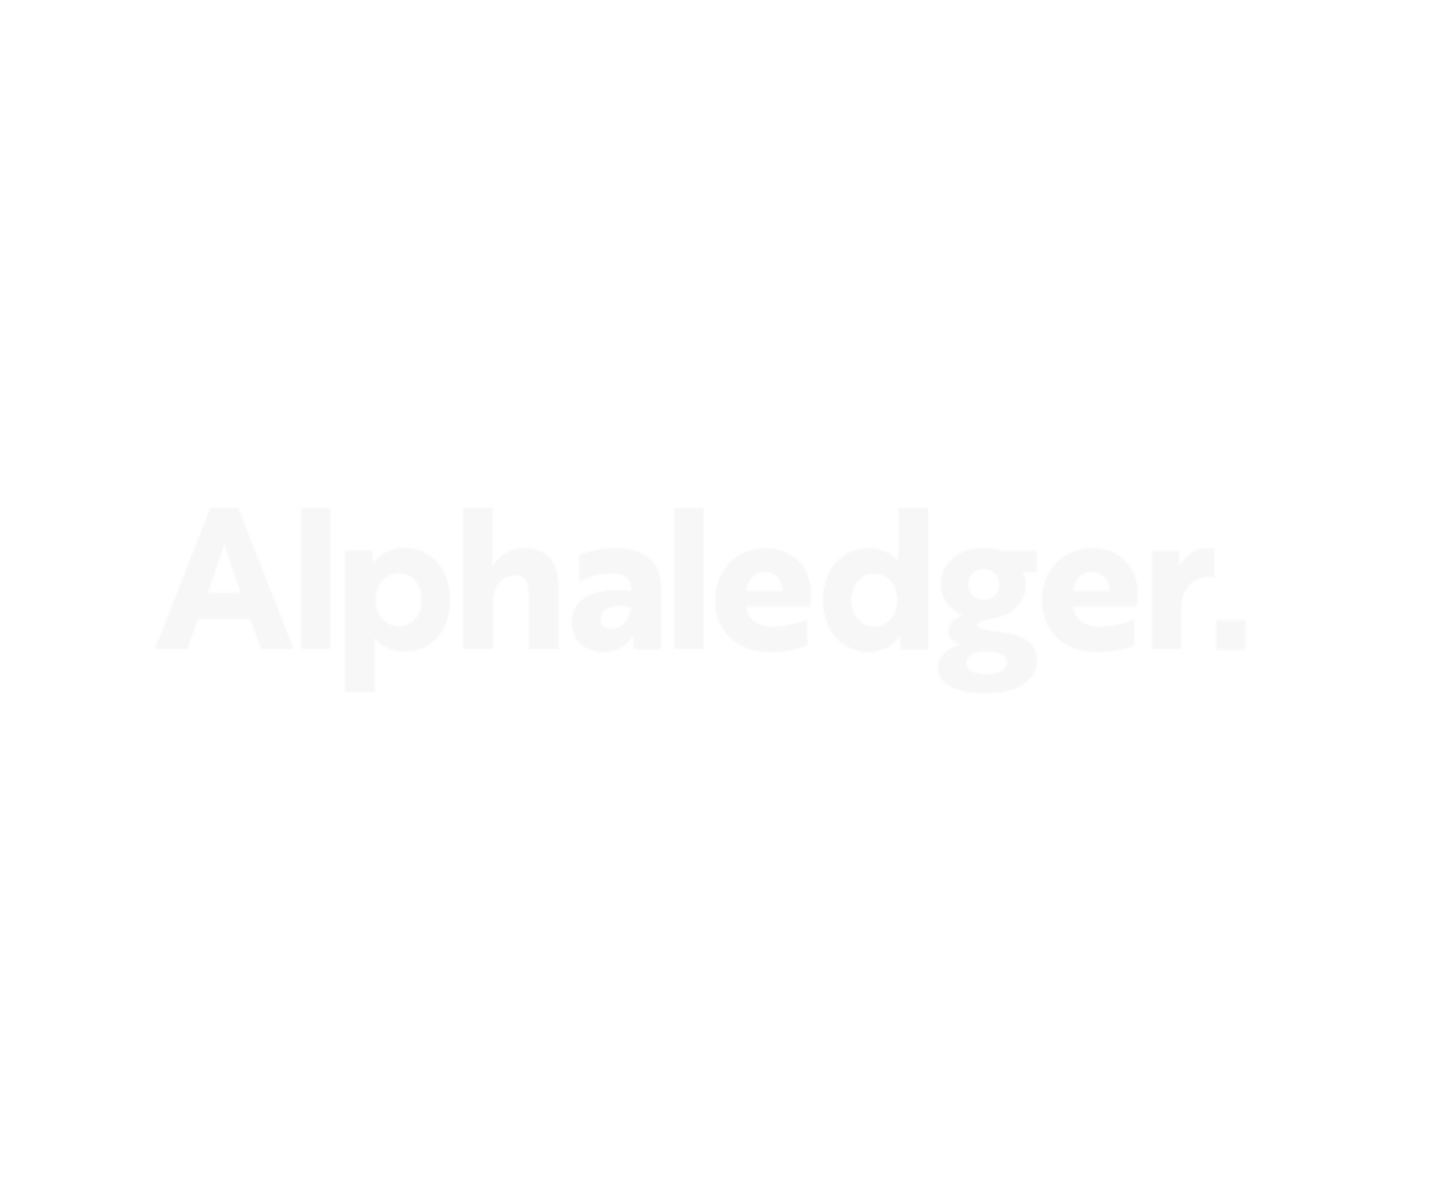 Alphaledger